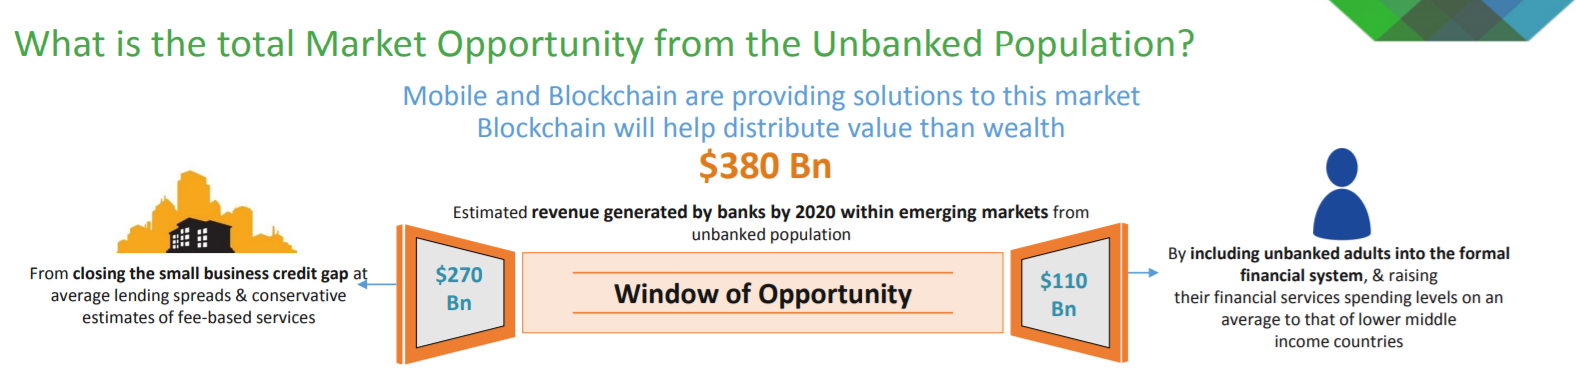 Blockchain unbanked market opportunity